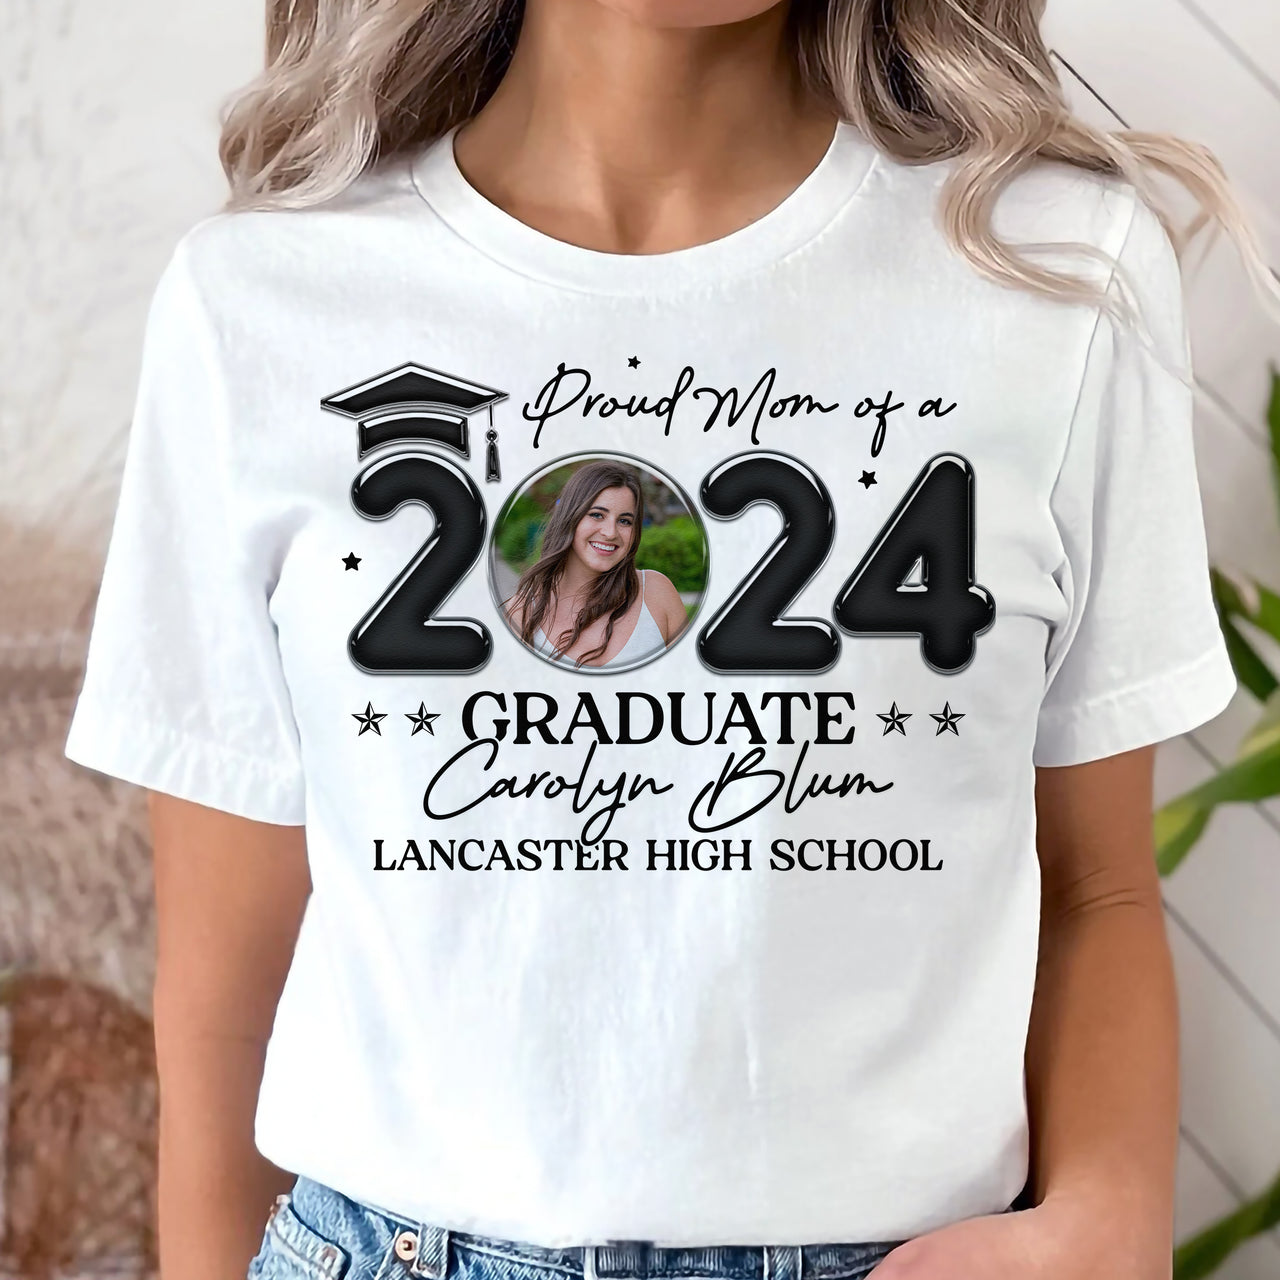 Personalized T-shirt - Graduation Keepsake Gift - Balloon Style Proud Mom Dad Of A 2024 Graduate Photo Merchize